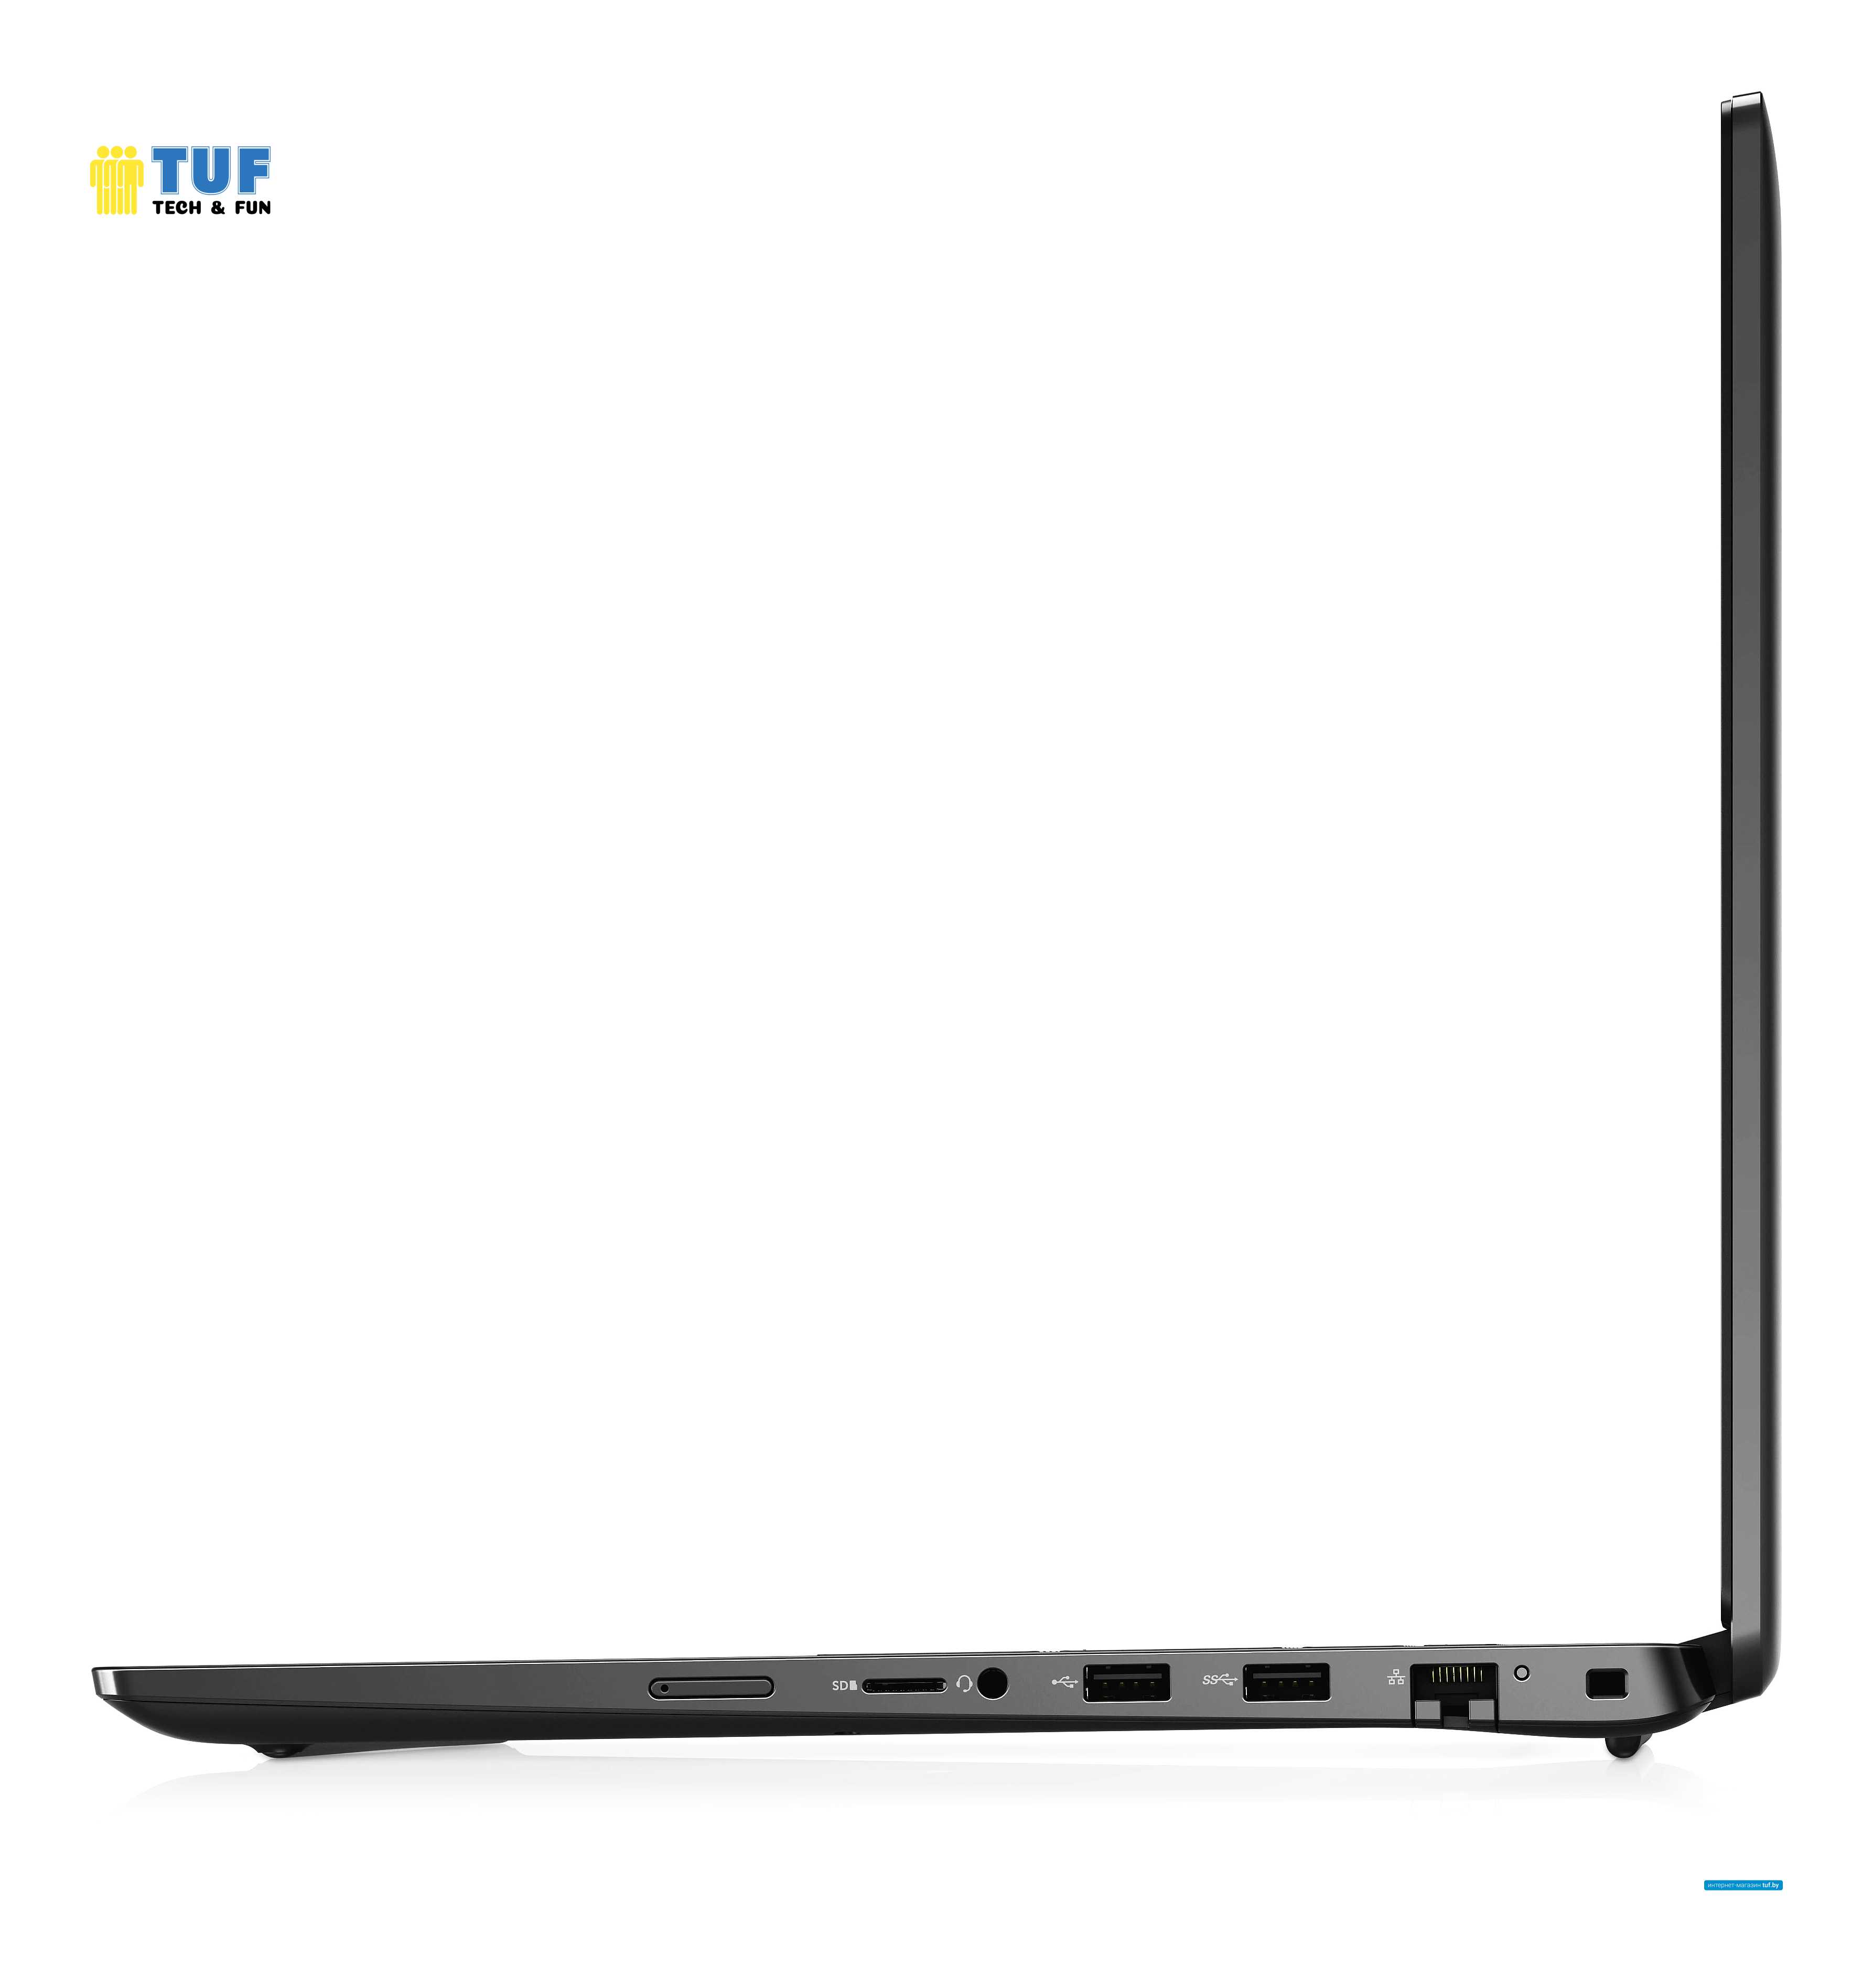 Ноутбук Dell Latitude 15 3520-2439